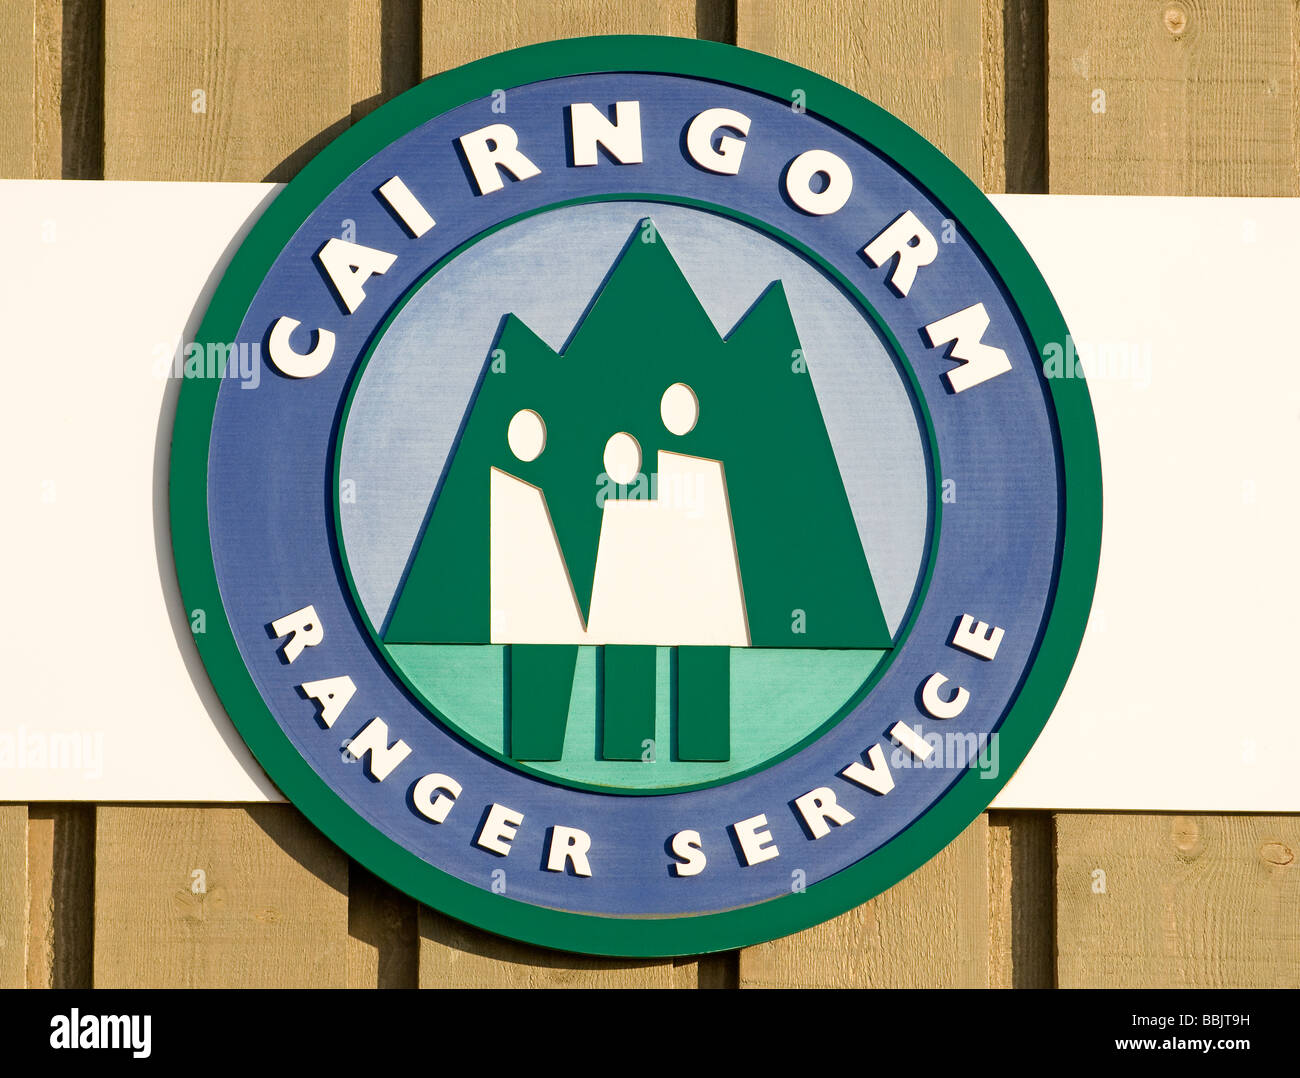 The Cairngorm Mountain Ranger Information Base in Coire Cas Aviemore Strathspey Highland Region Scotland.   SCO 2486 Stock Photo